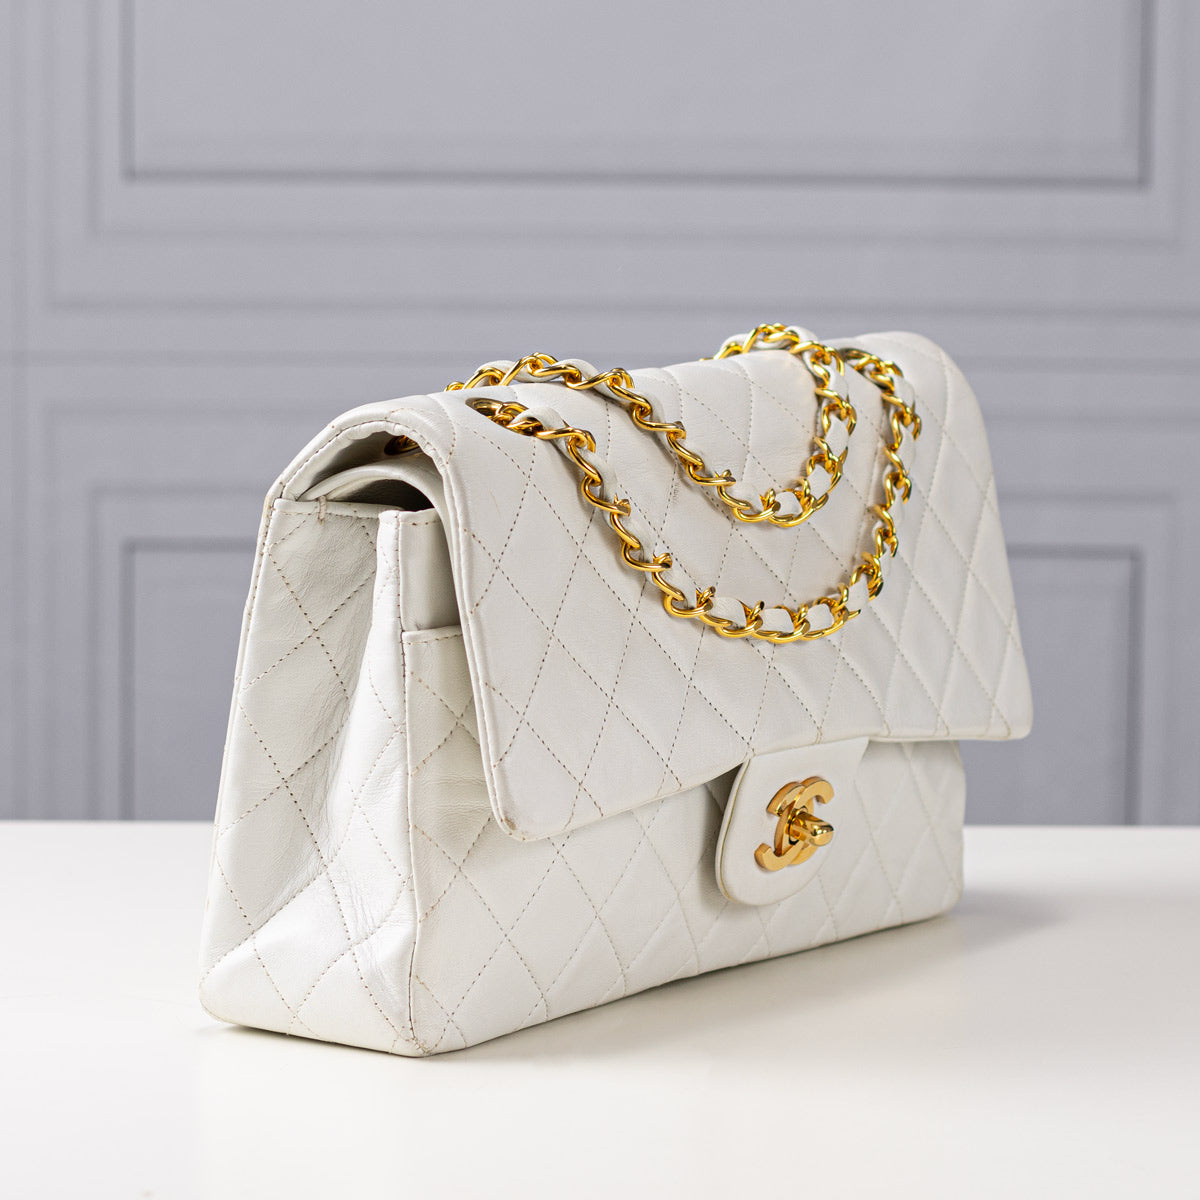 Chanel Medium Double Flap Bag